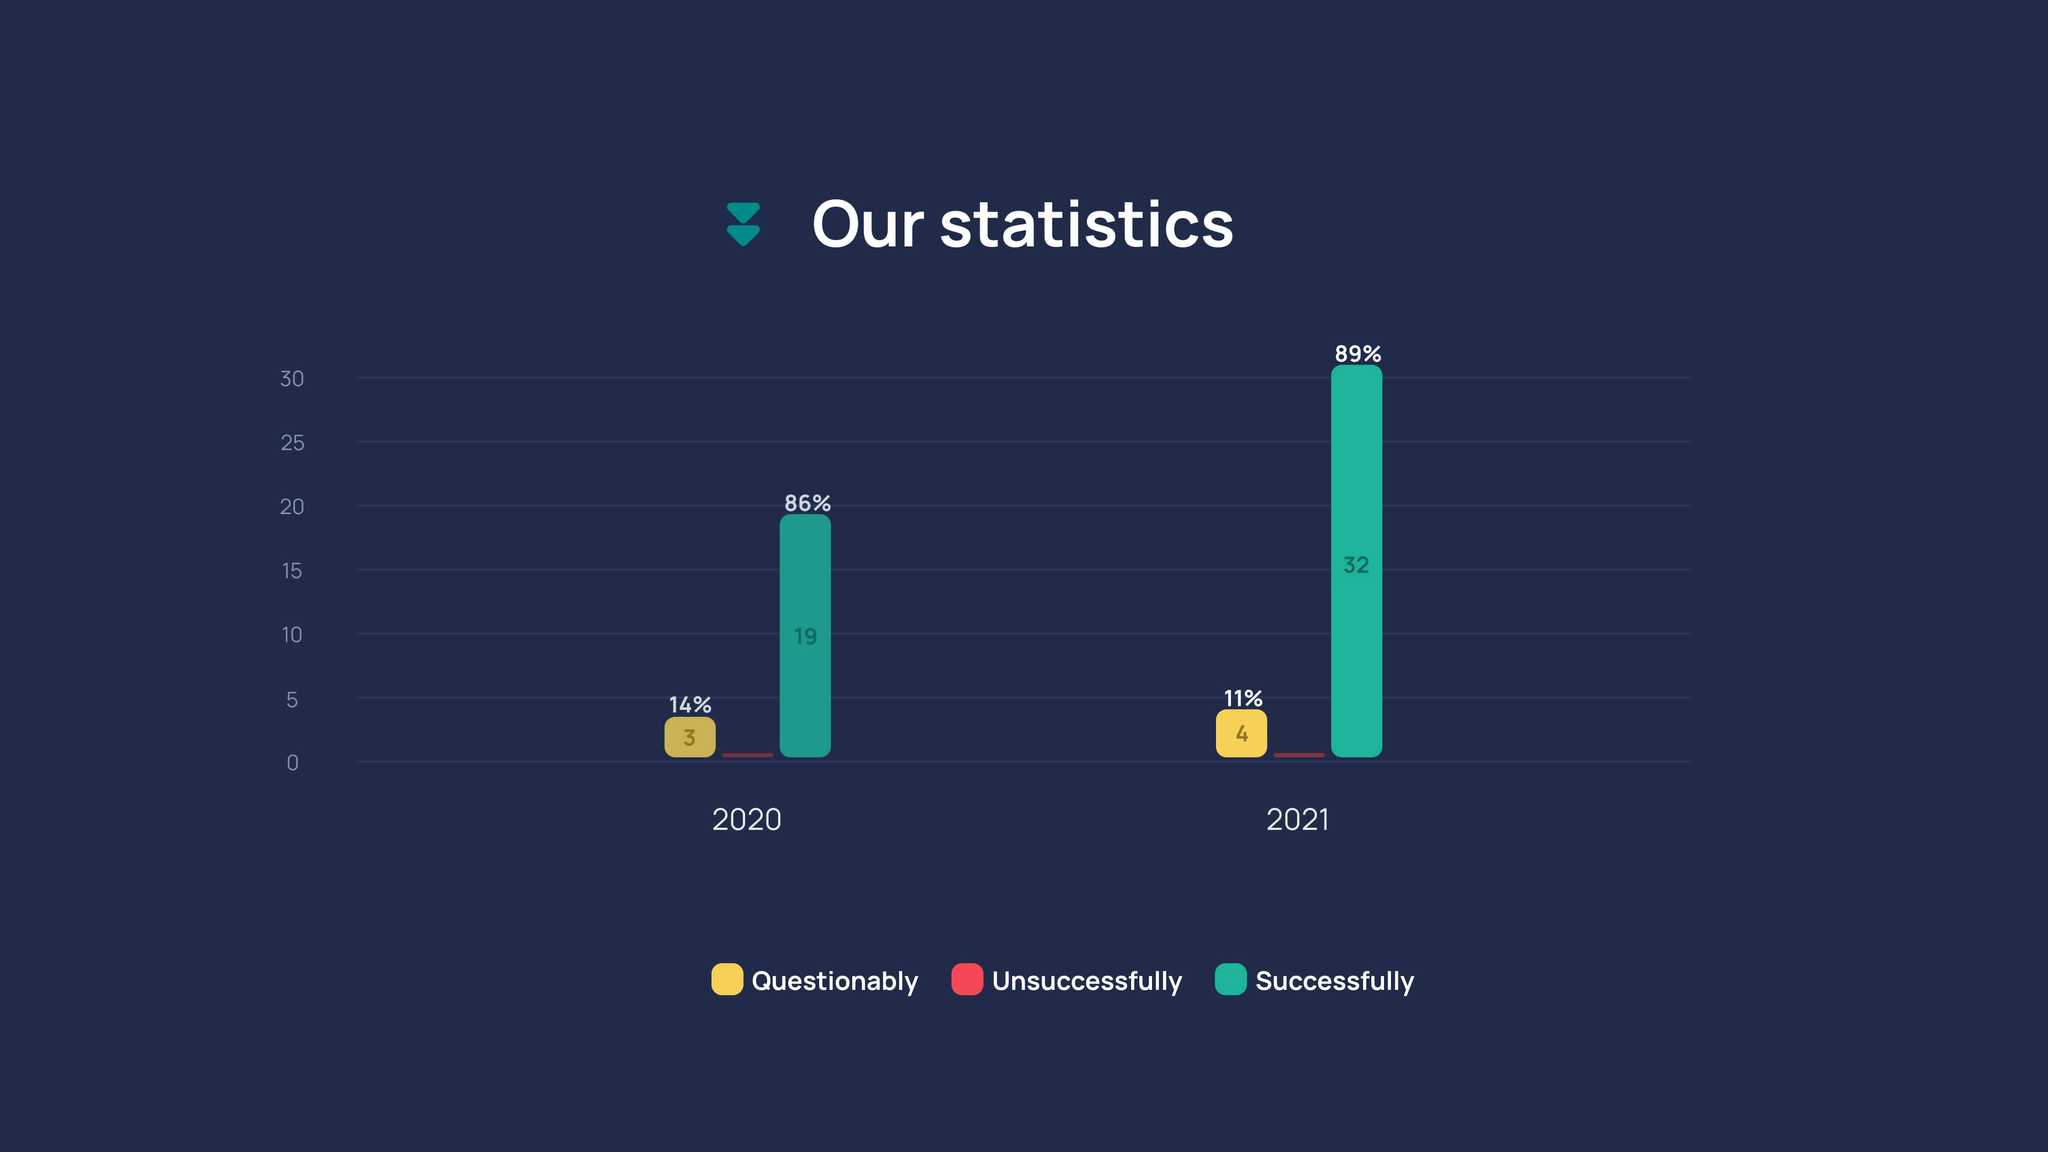 Our statistics